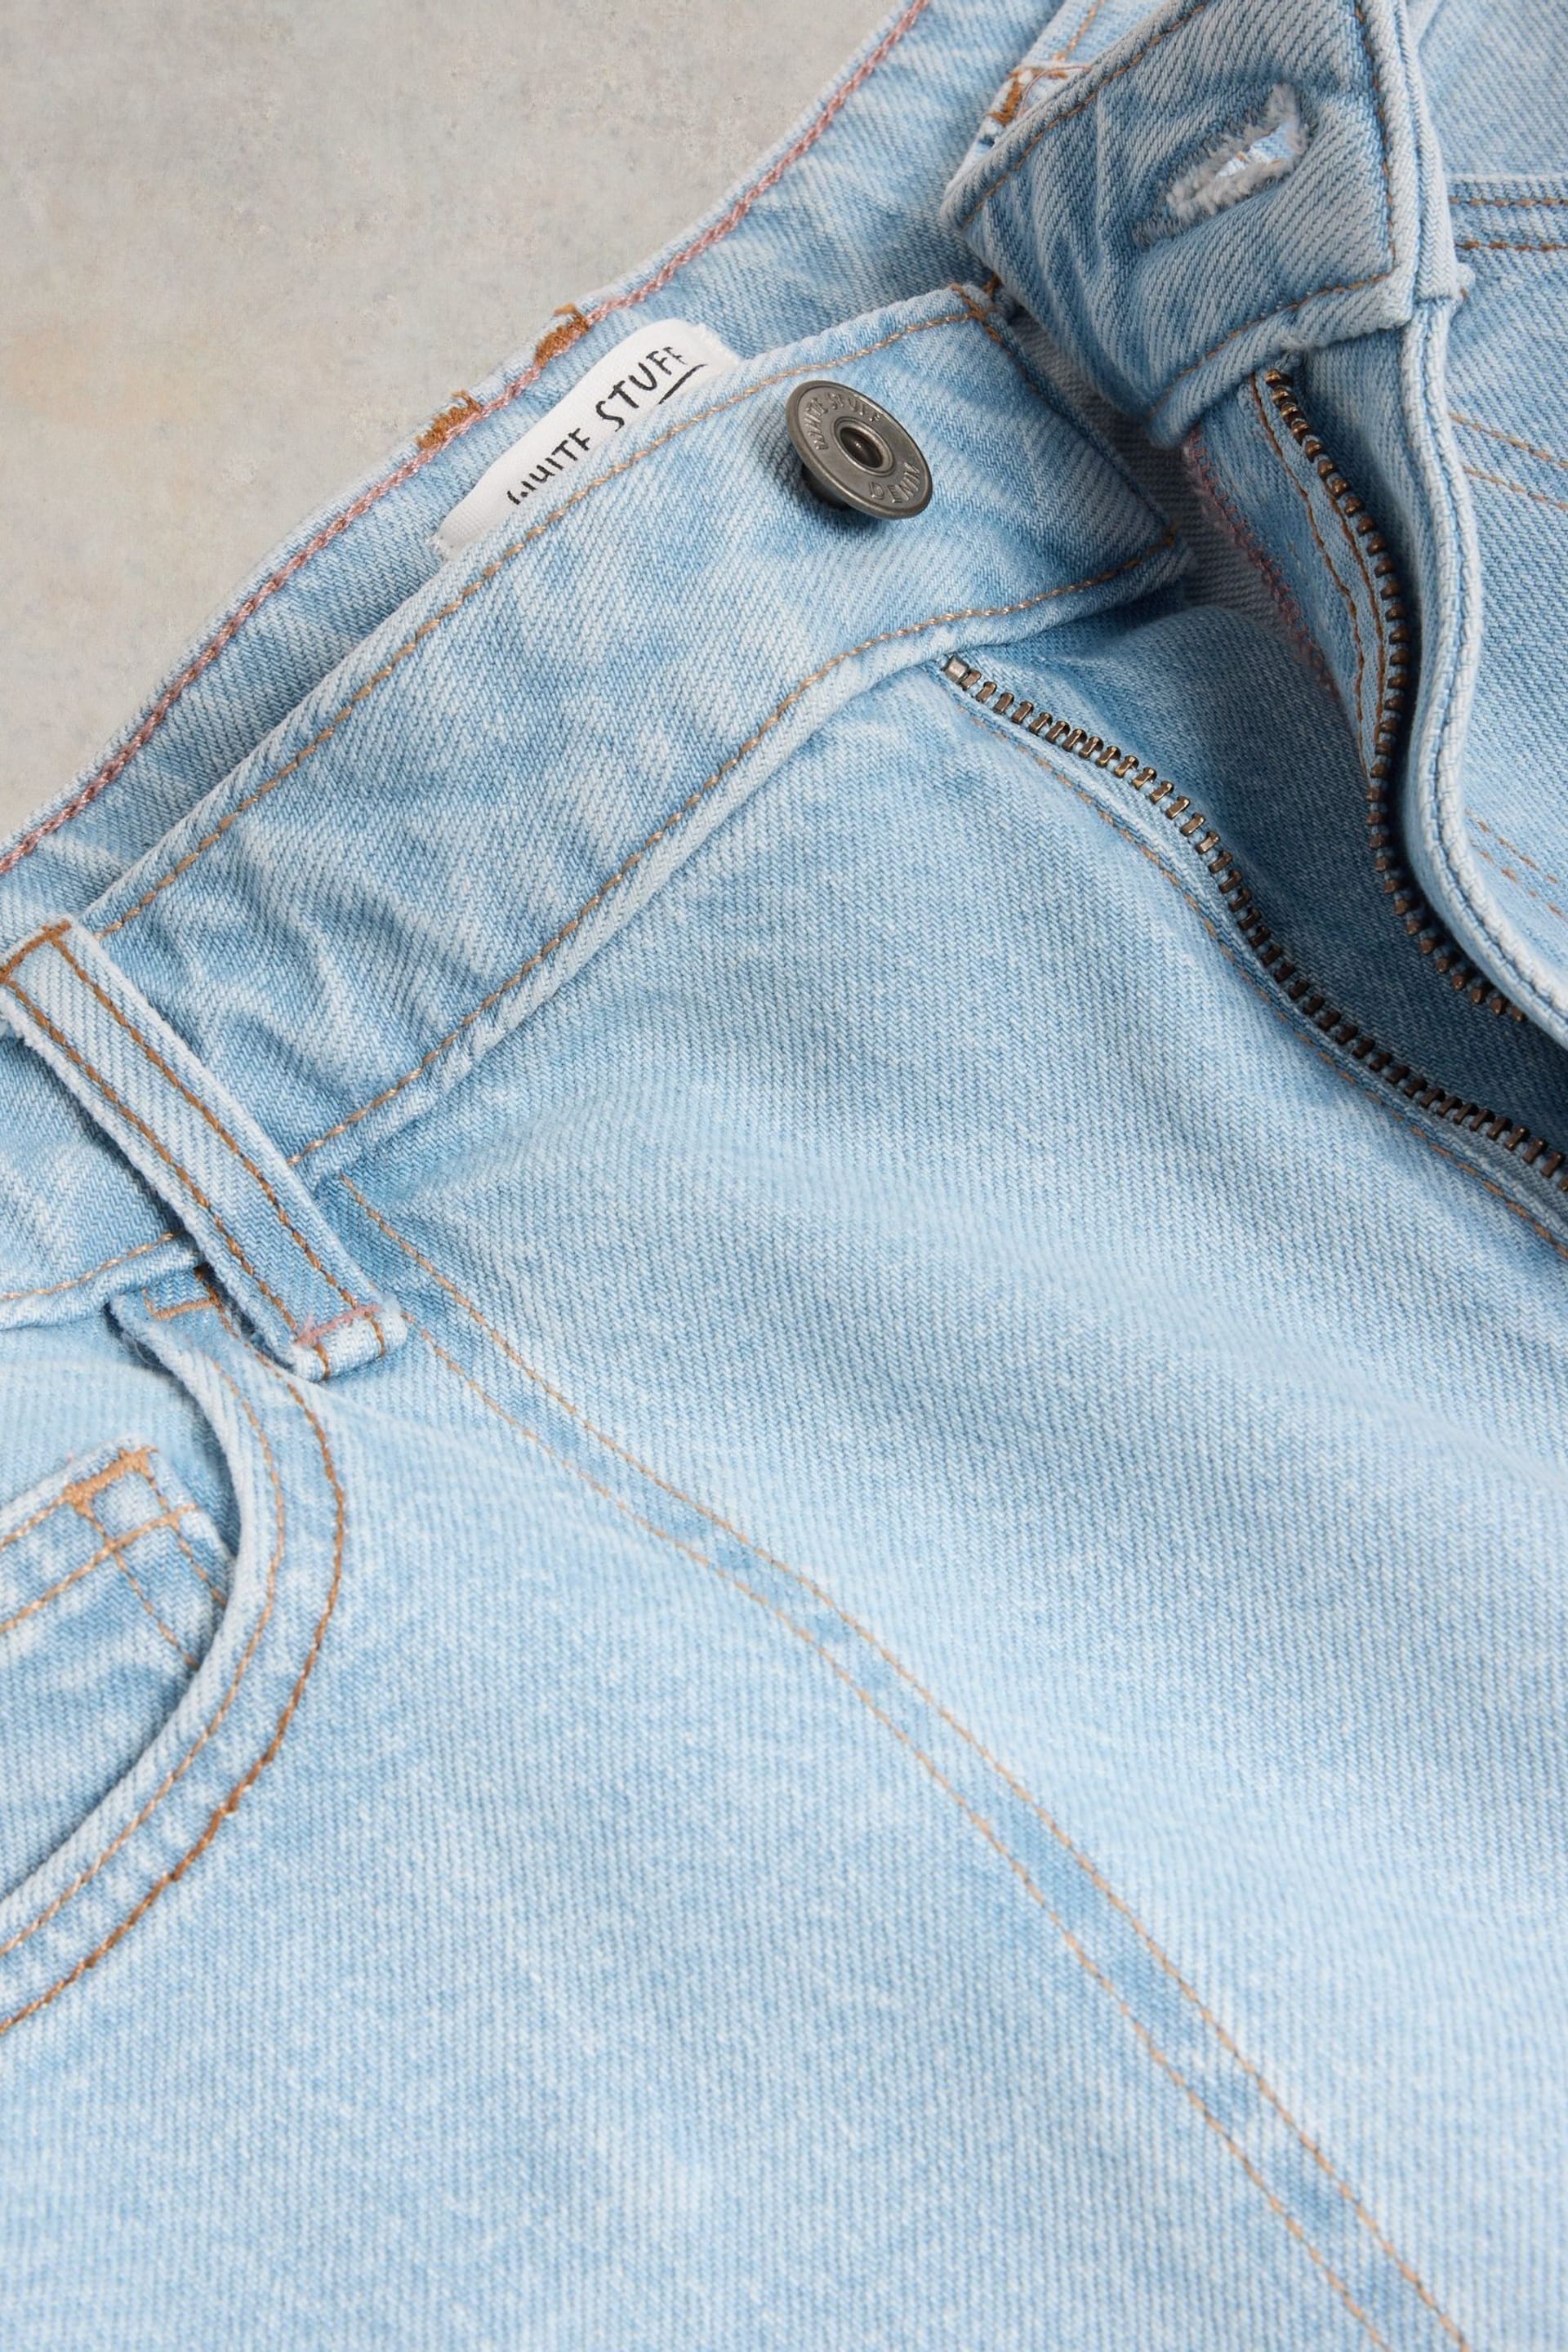 White Stuff Blue Tia Wide Leg Crop Jeans - Image 7 of 7